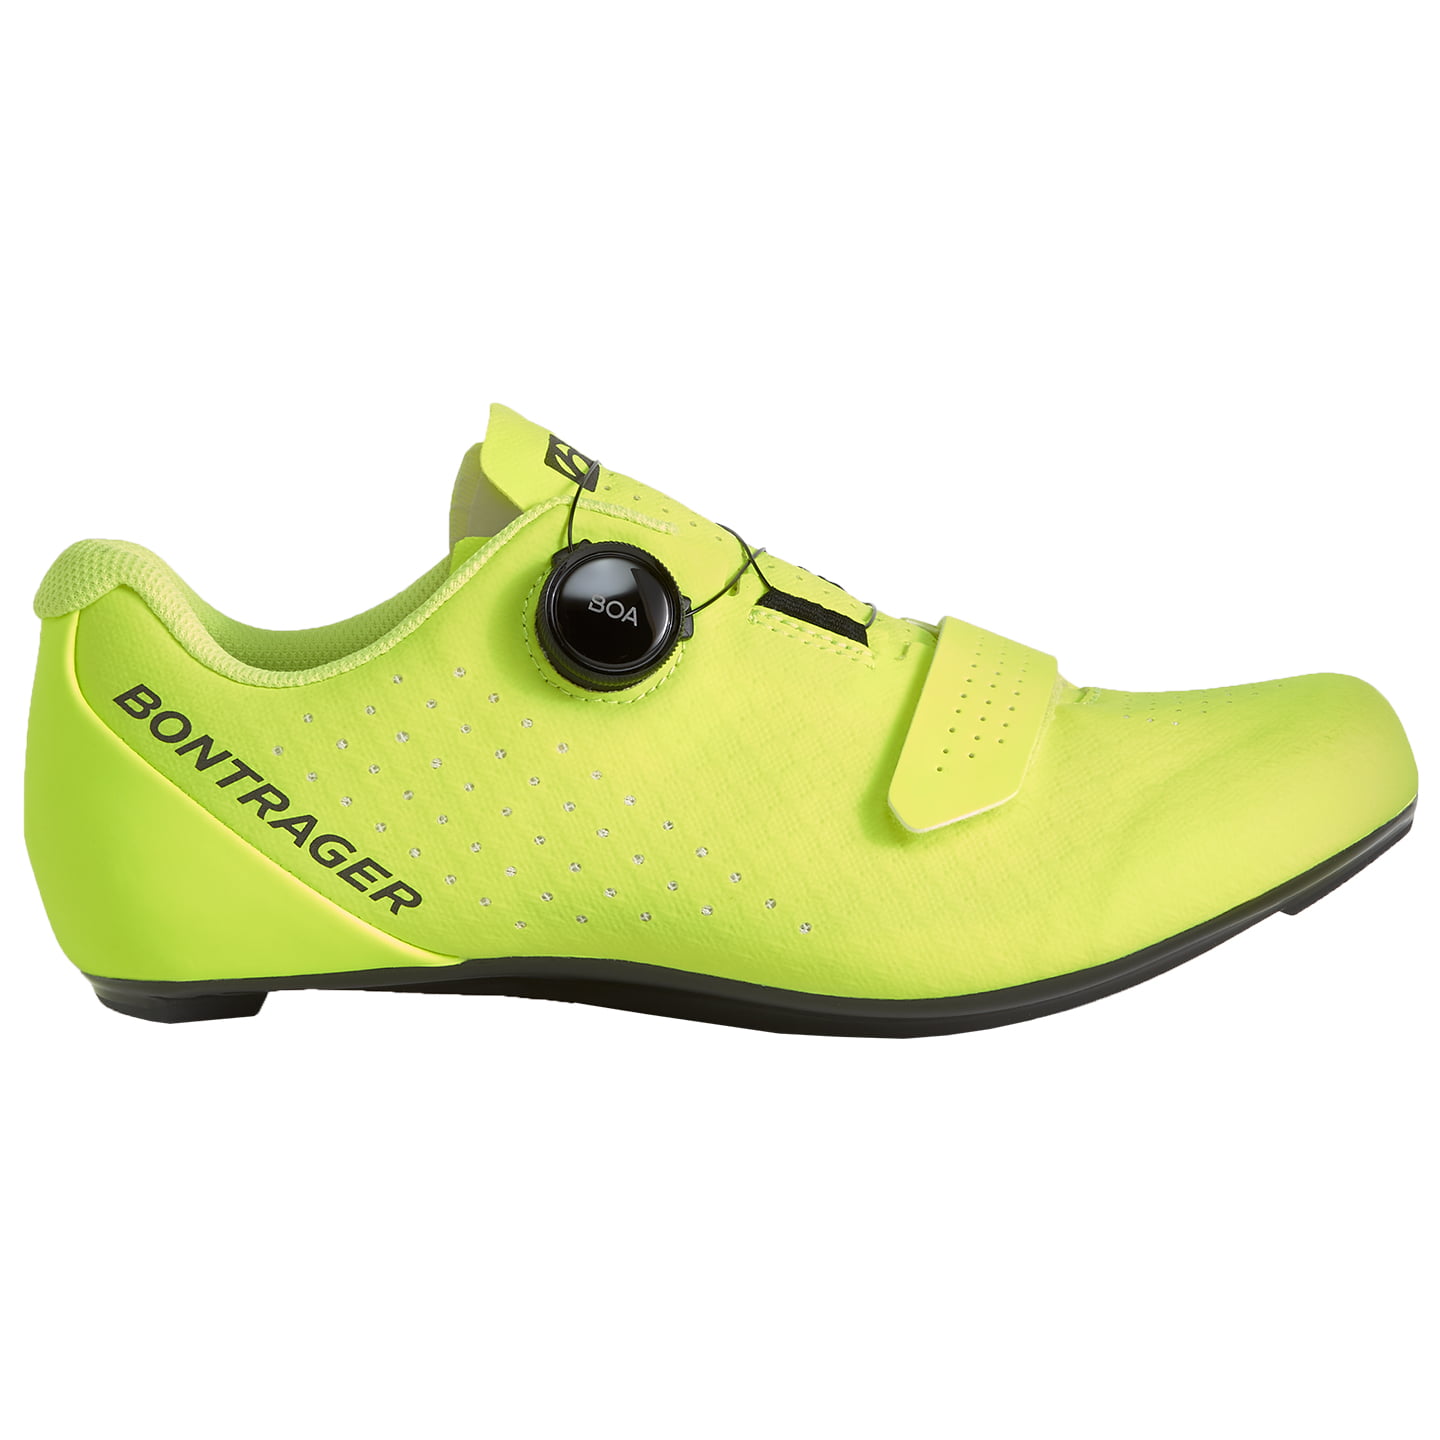 BONTRAGER Circuit Road Bike Shoes Road Shoes, for men, size 46, Cycling shoes